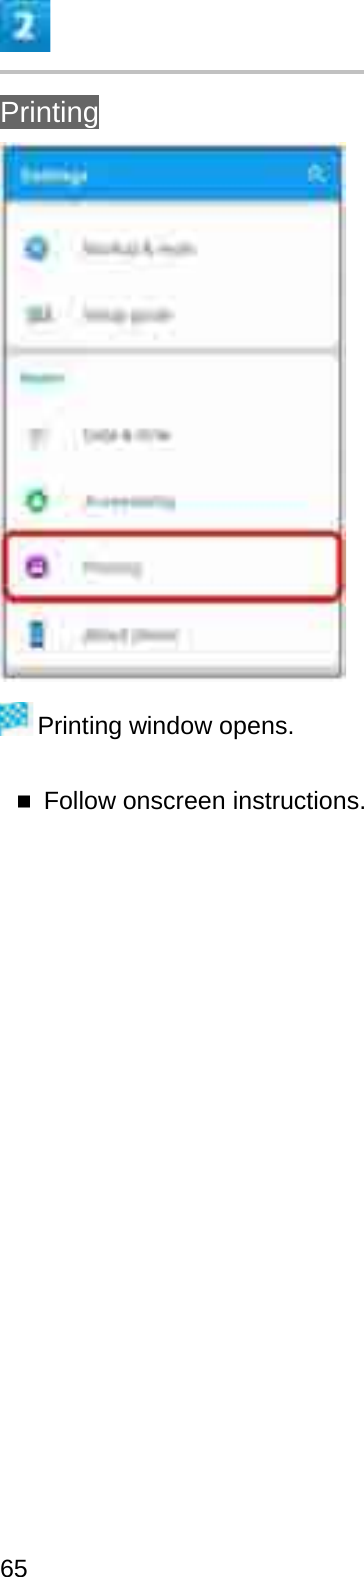 PrintingPrinting window opens.Follow onscreen instructions.65